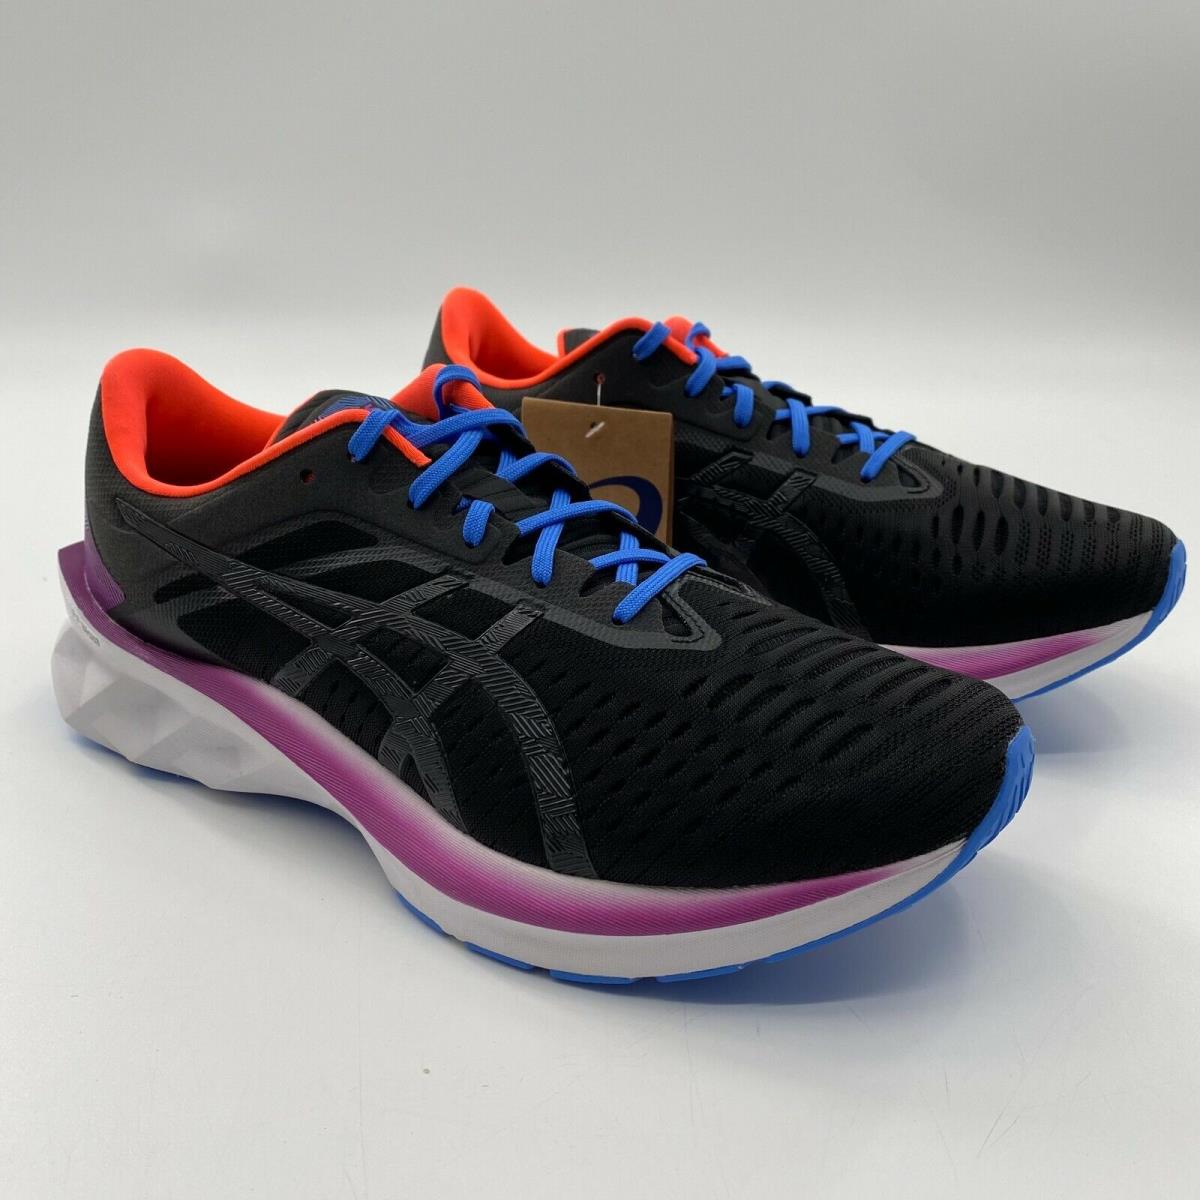 Asics Women`s Novablast Running Shoes Back/purple/orange 1012A584-001 Size 11